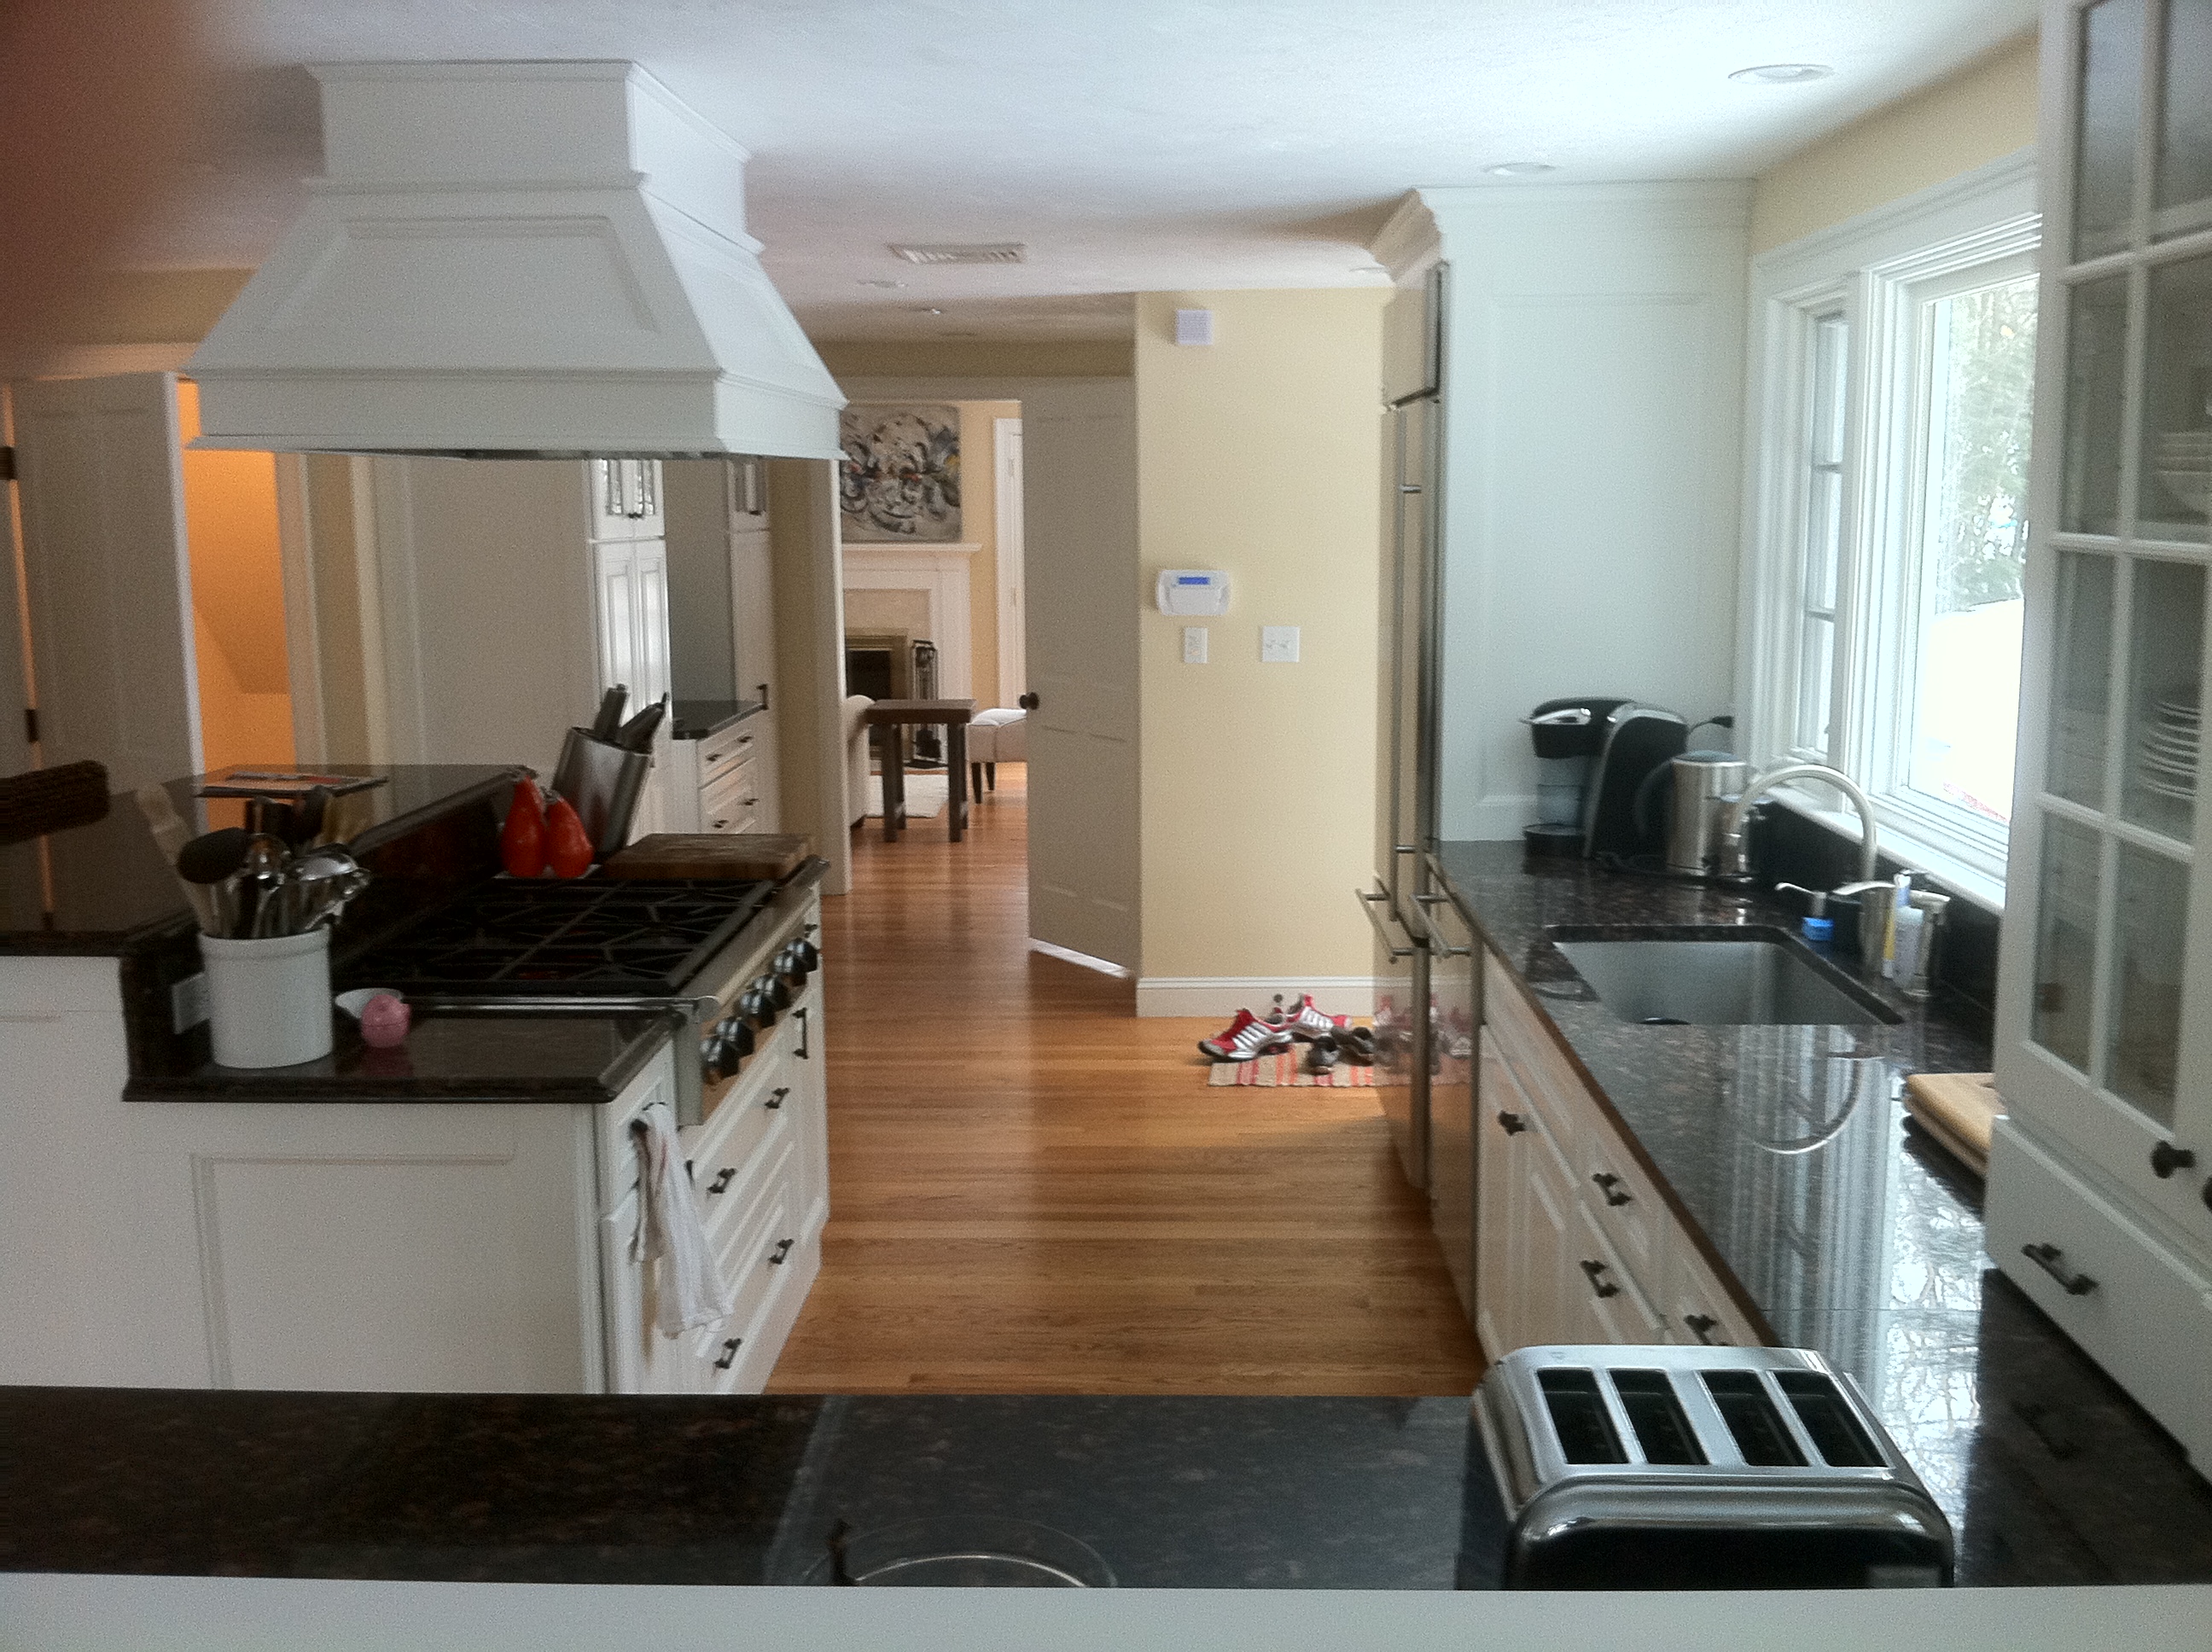 Cabinet Refinishing & Kitchen Remodeling in Rhode Island RI